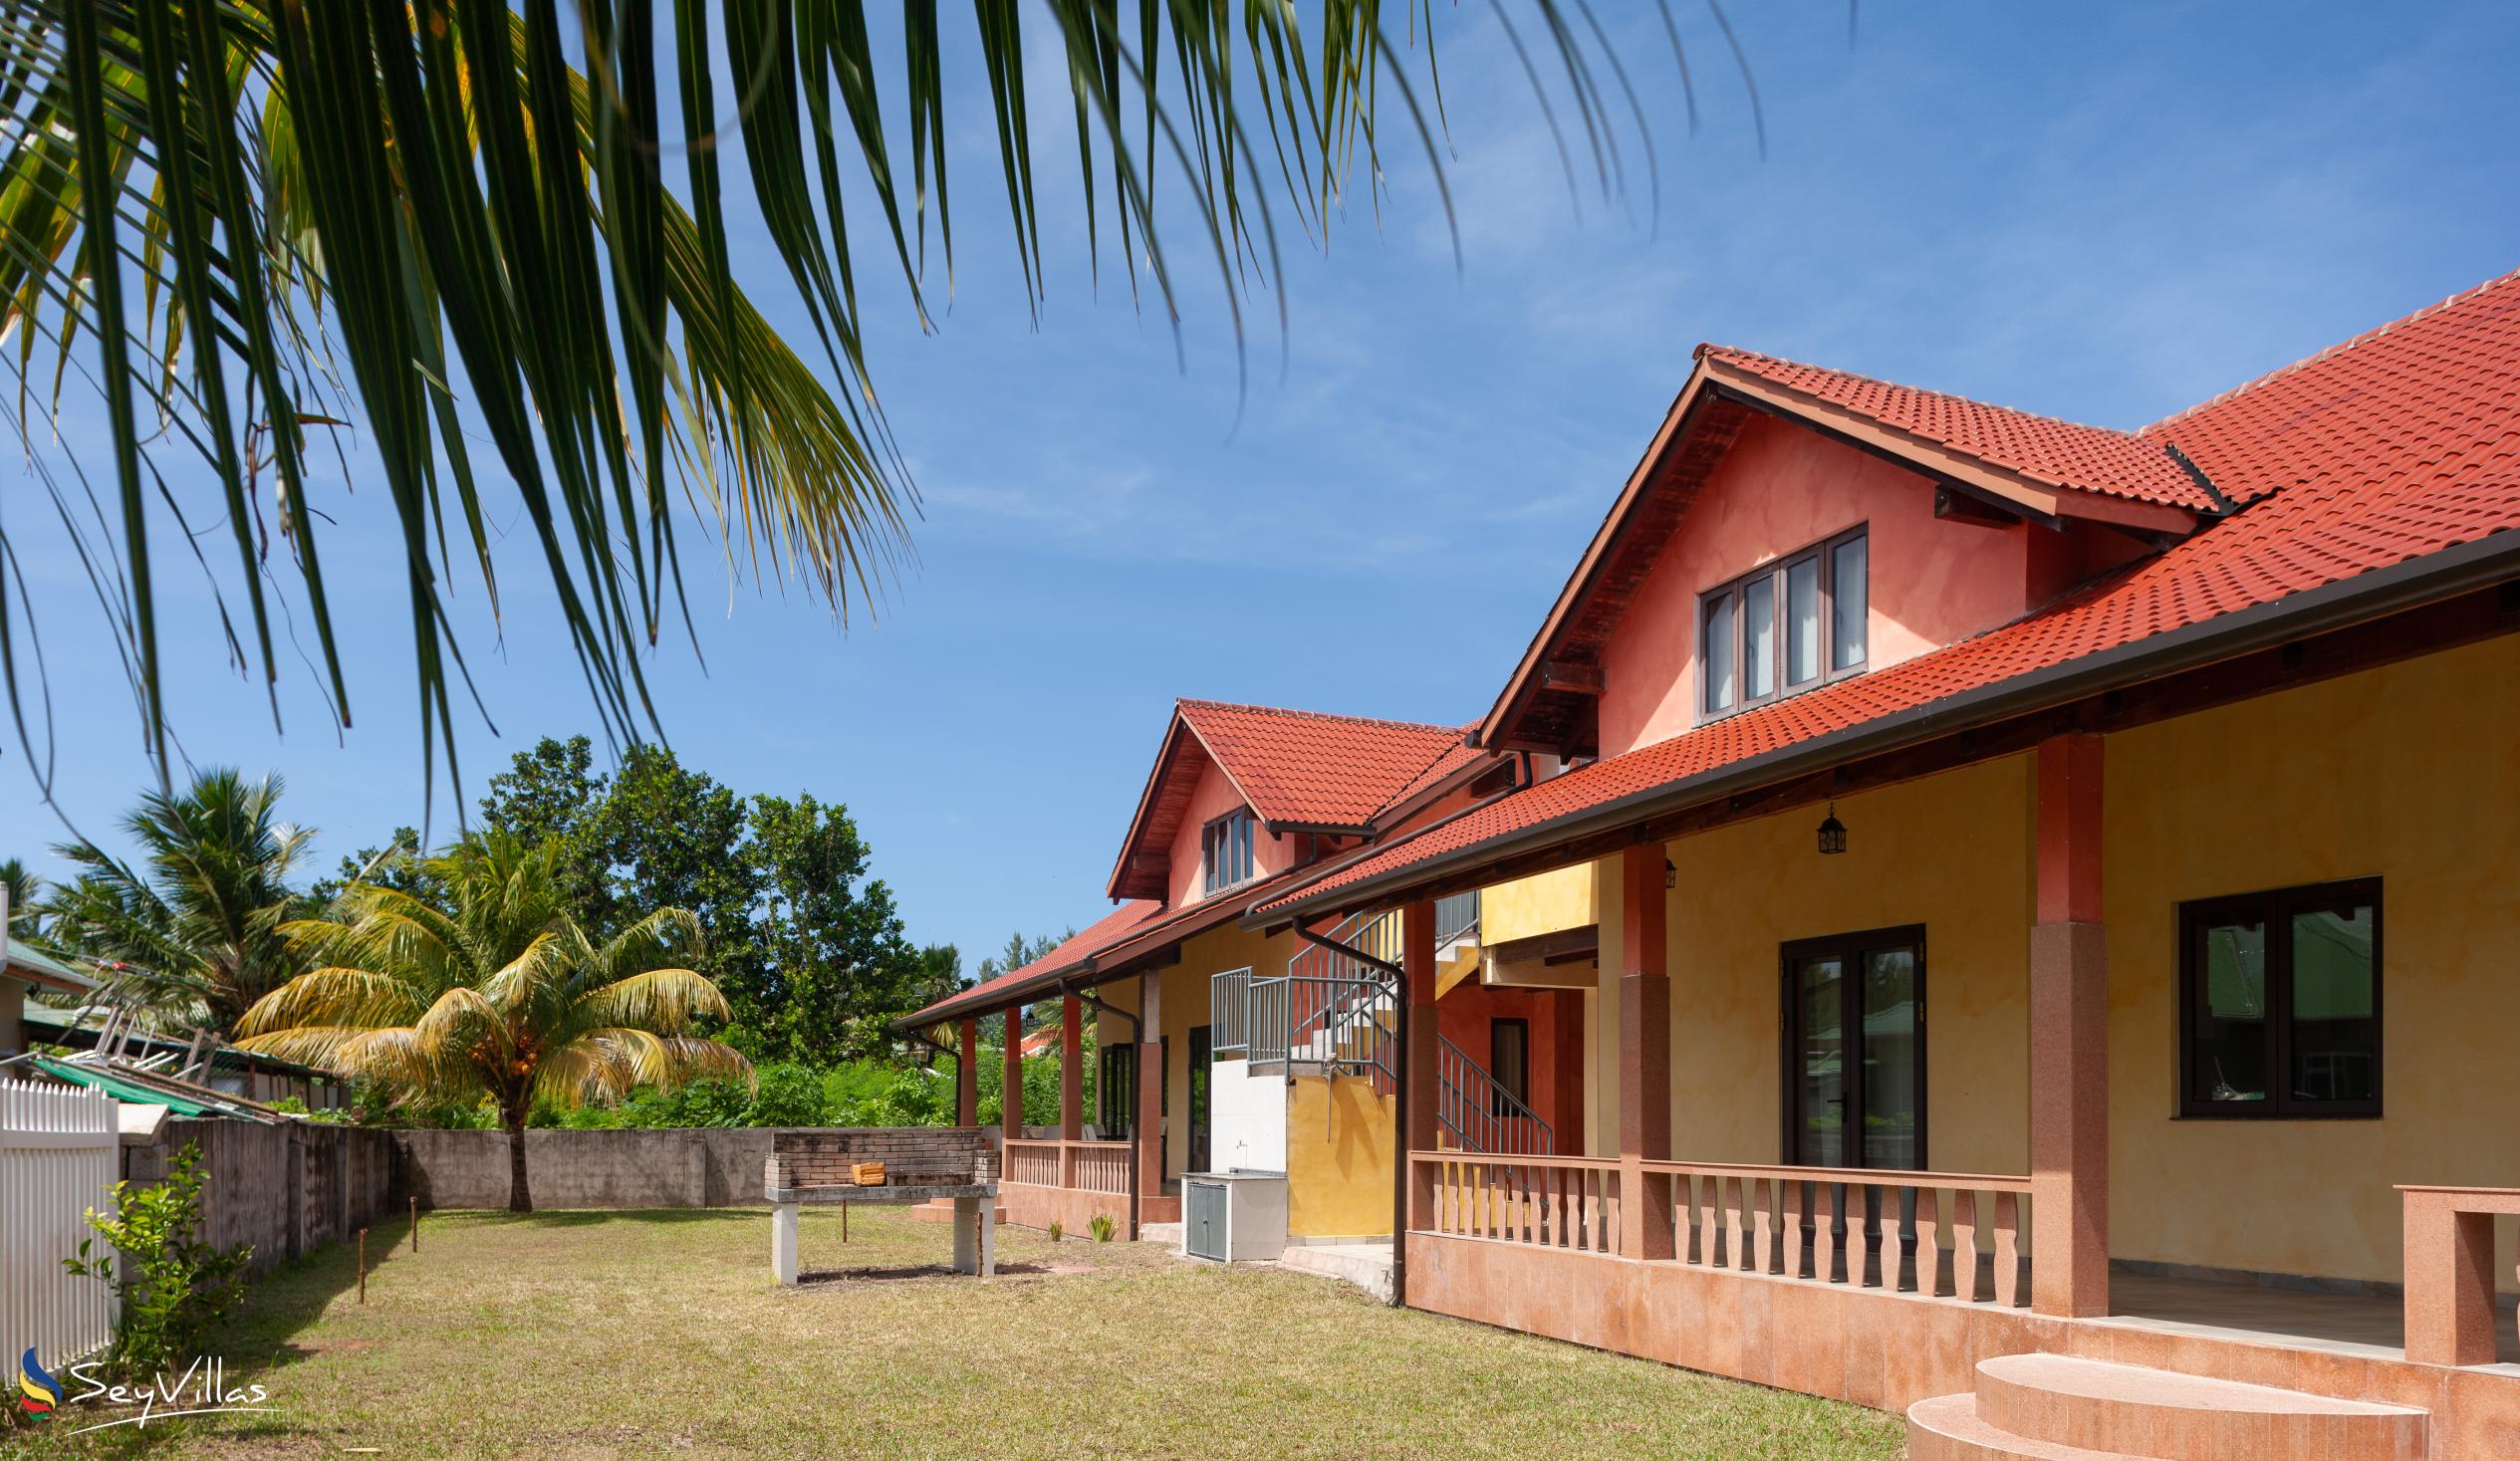 Photo 1: Villa Sole - Outdoor area - Praslin (Seychelles)